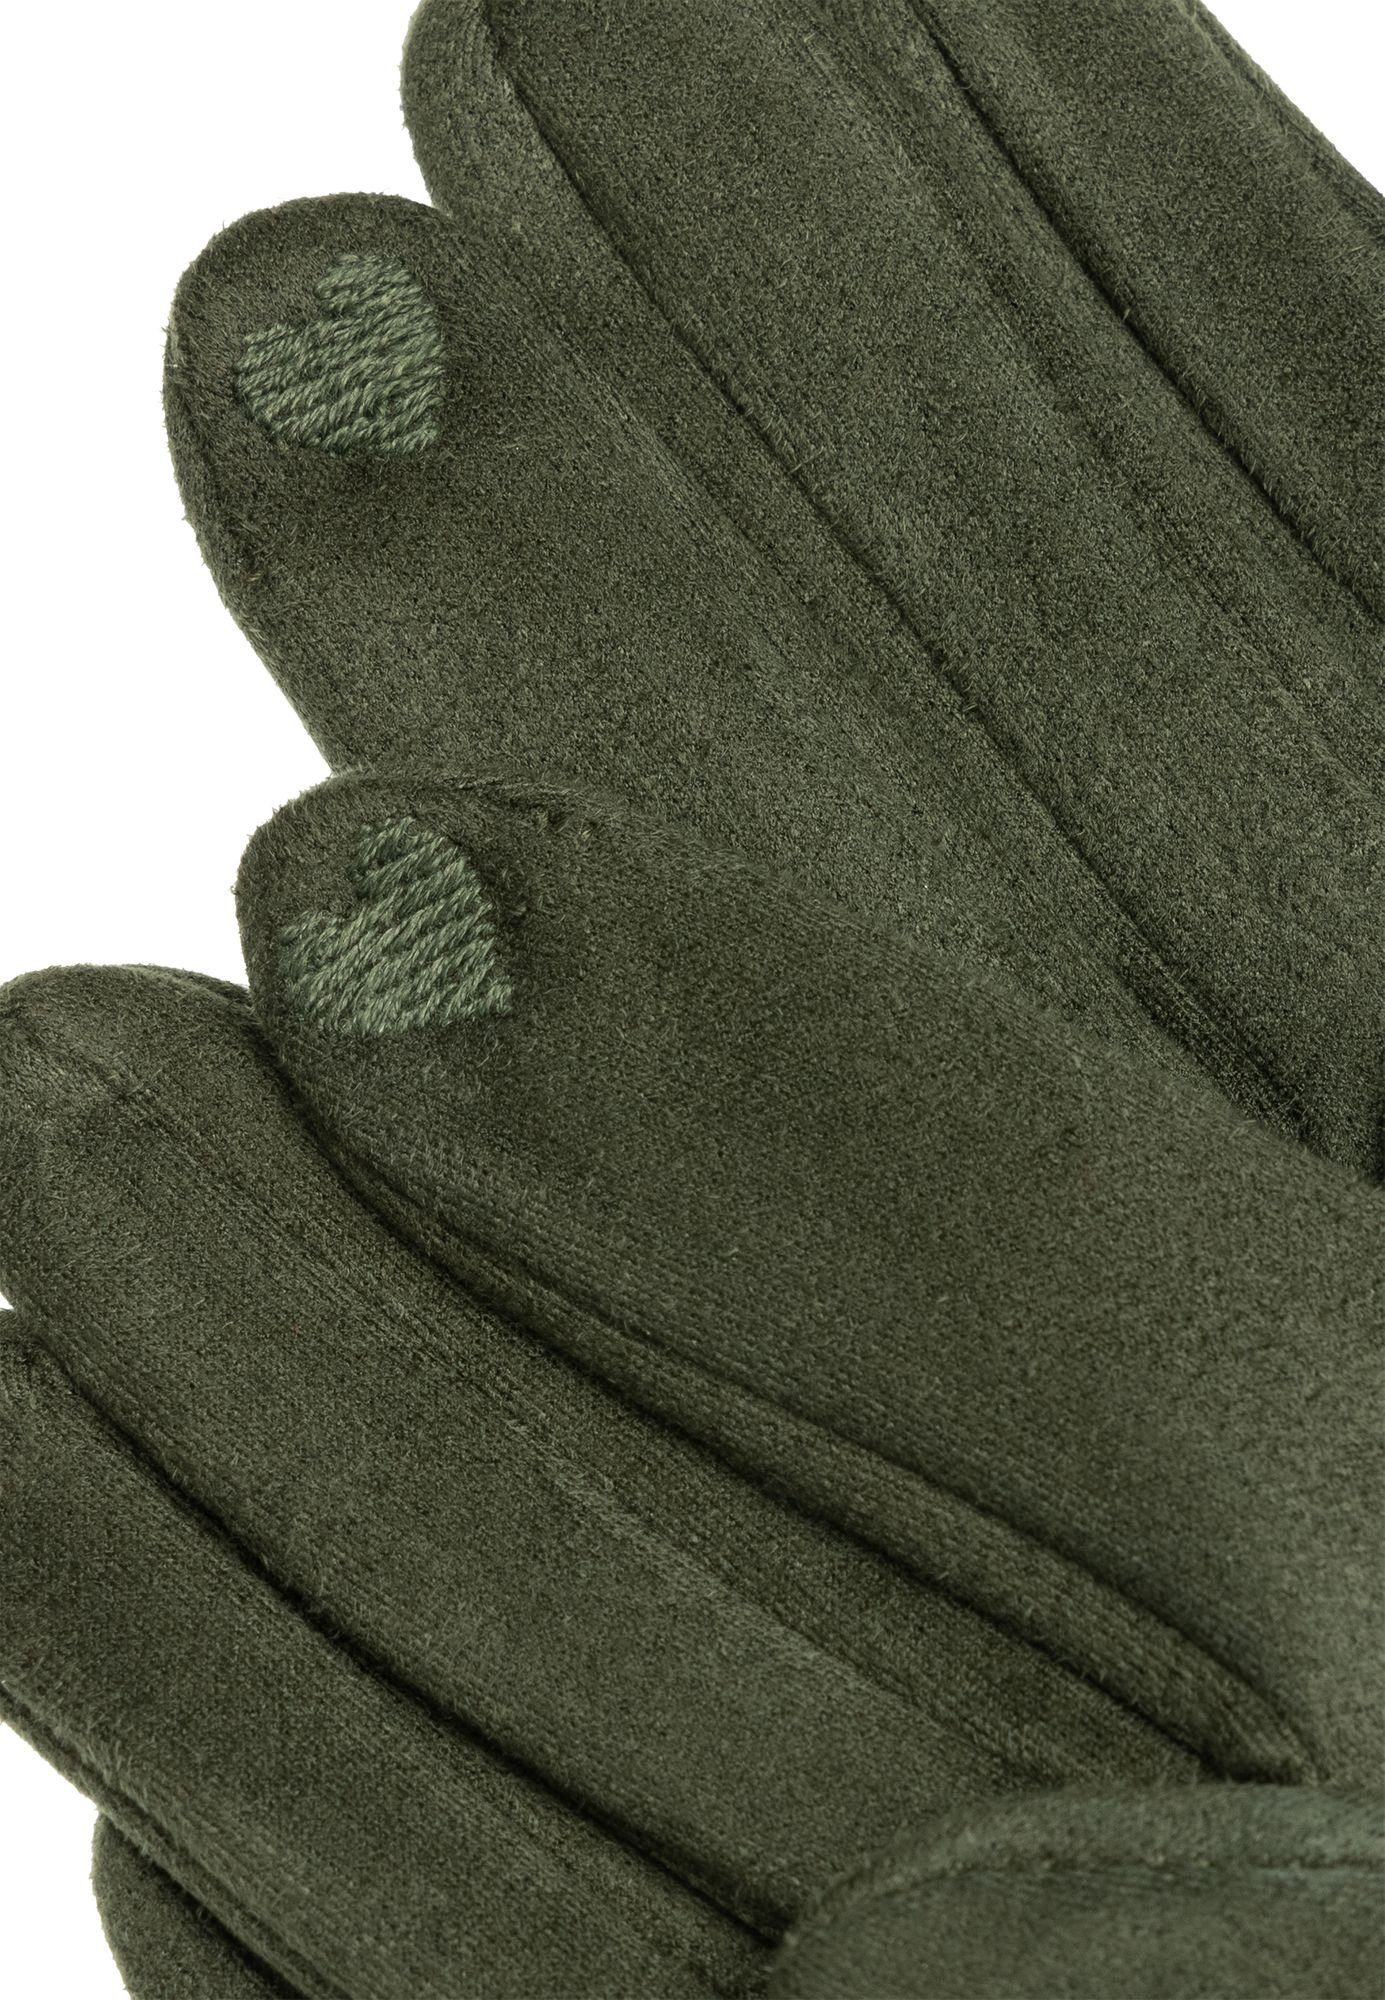 Caspar Strickhandschuhe elegante Damen GLV013 Winter Handschuhe klassisch uni grün oliv